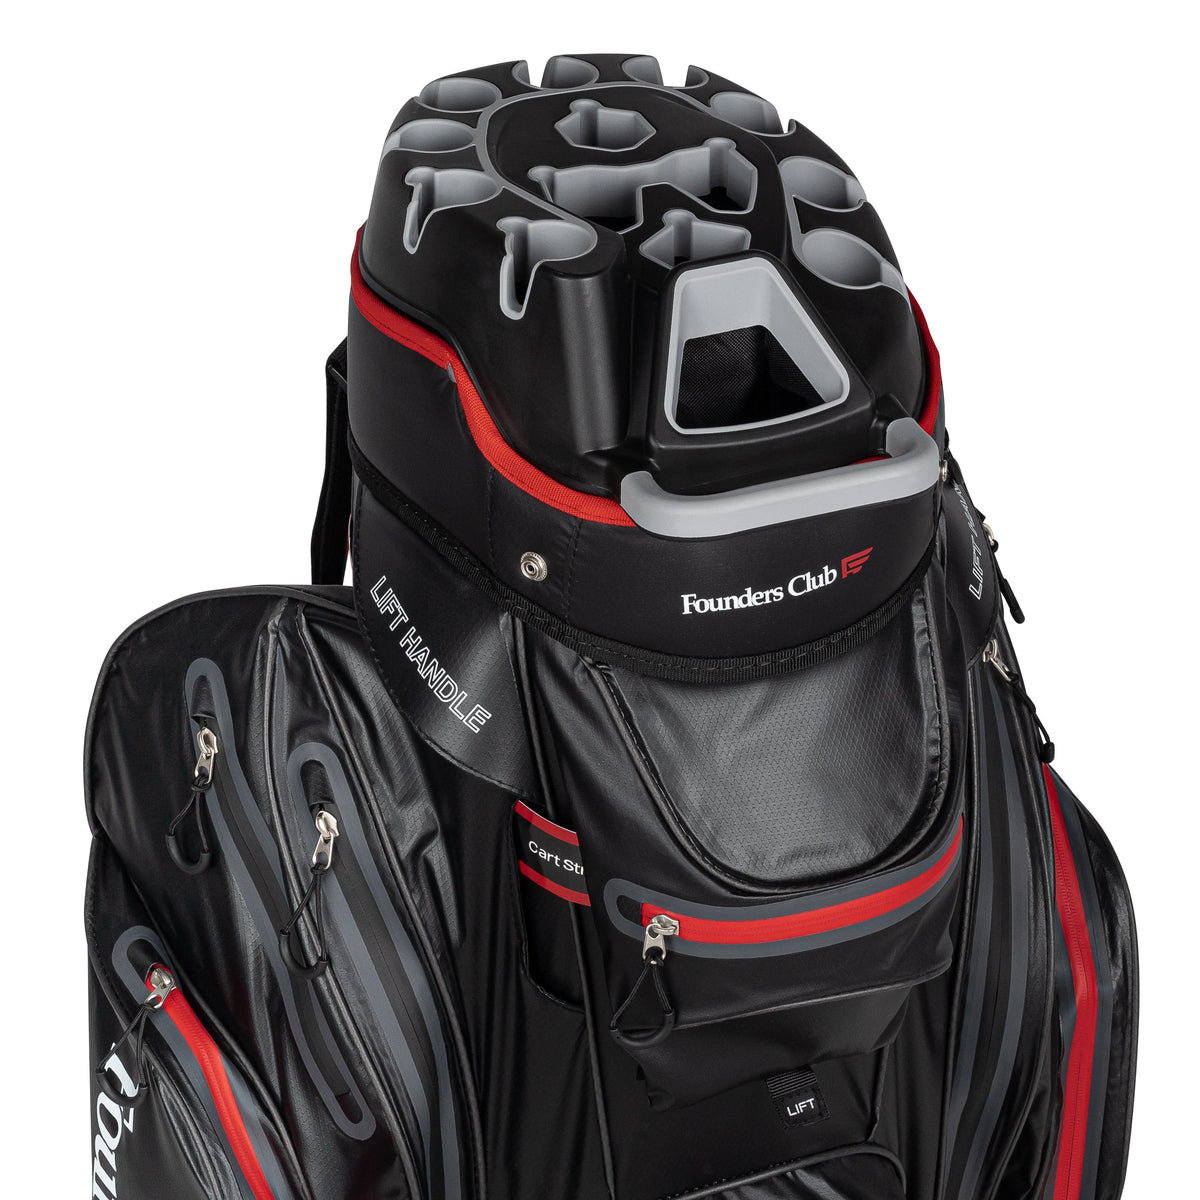 Founders Club Premium Organizer 14 Way Golf Cart Bag - Black/Red Waterproof